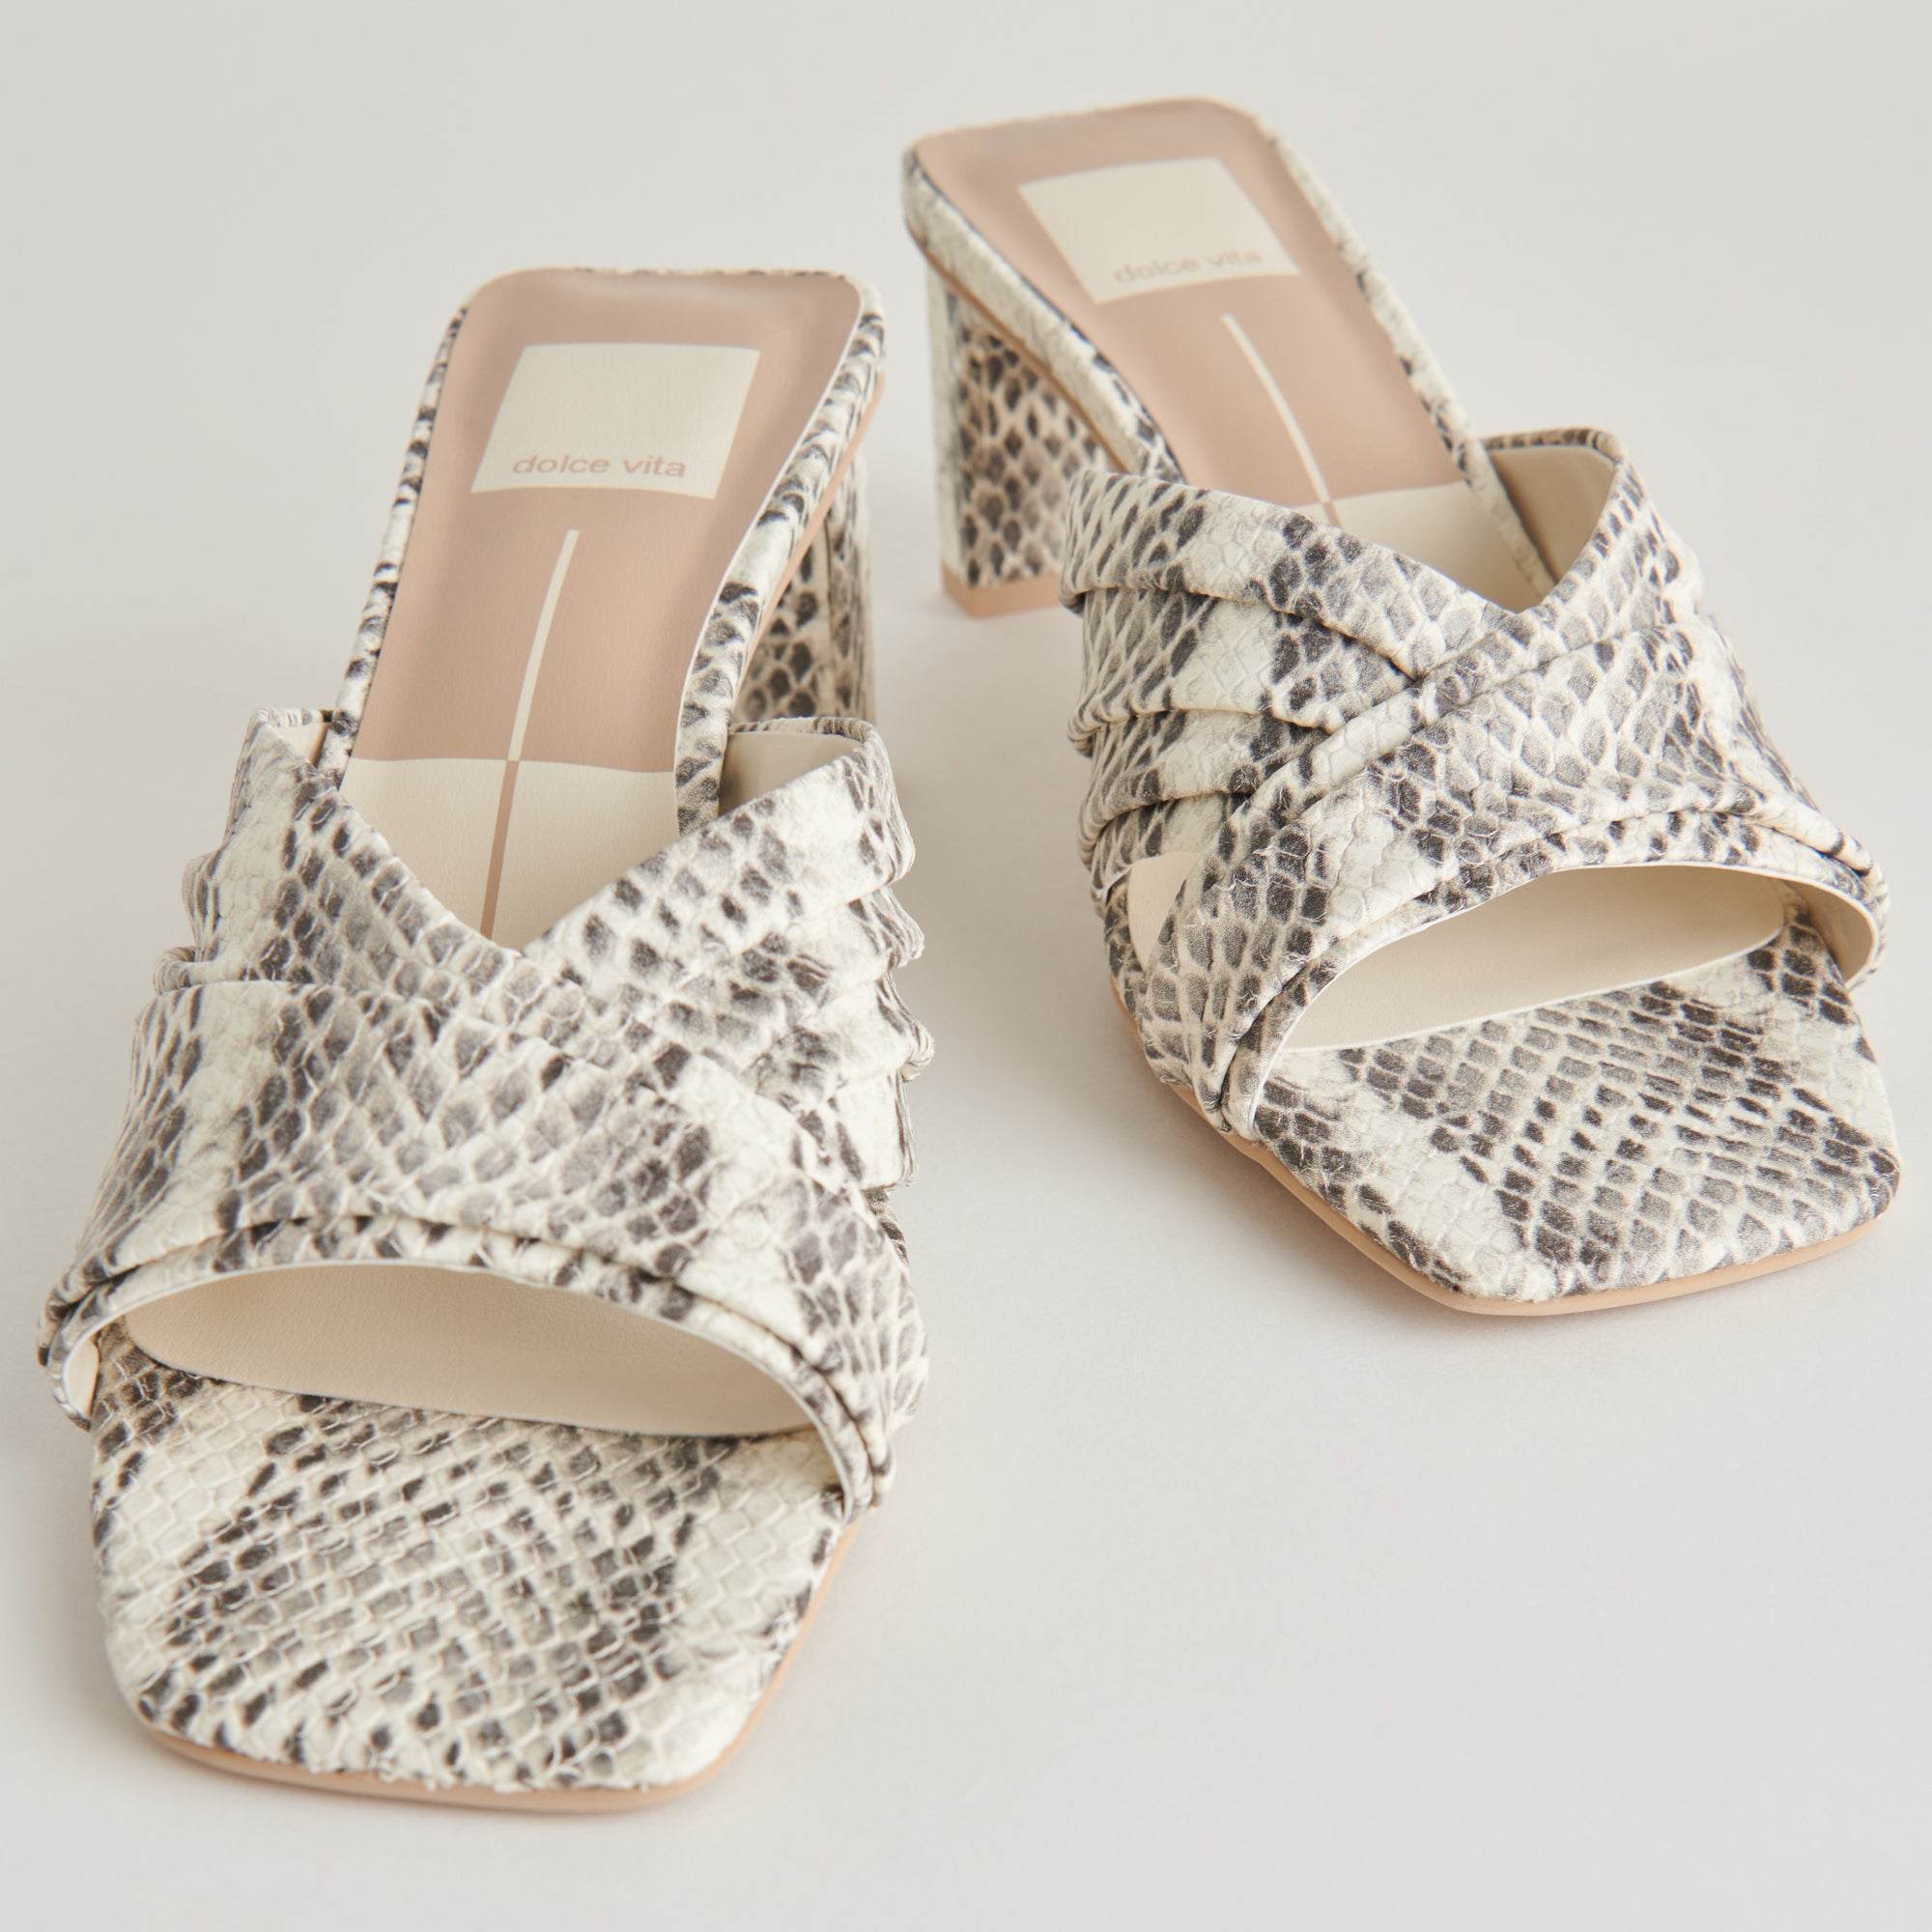 Simmi London Wide Fit Adley platform heeled shoes in grey snake print | ASOS